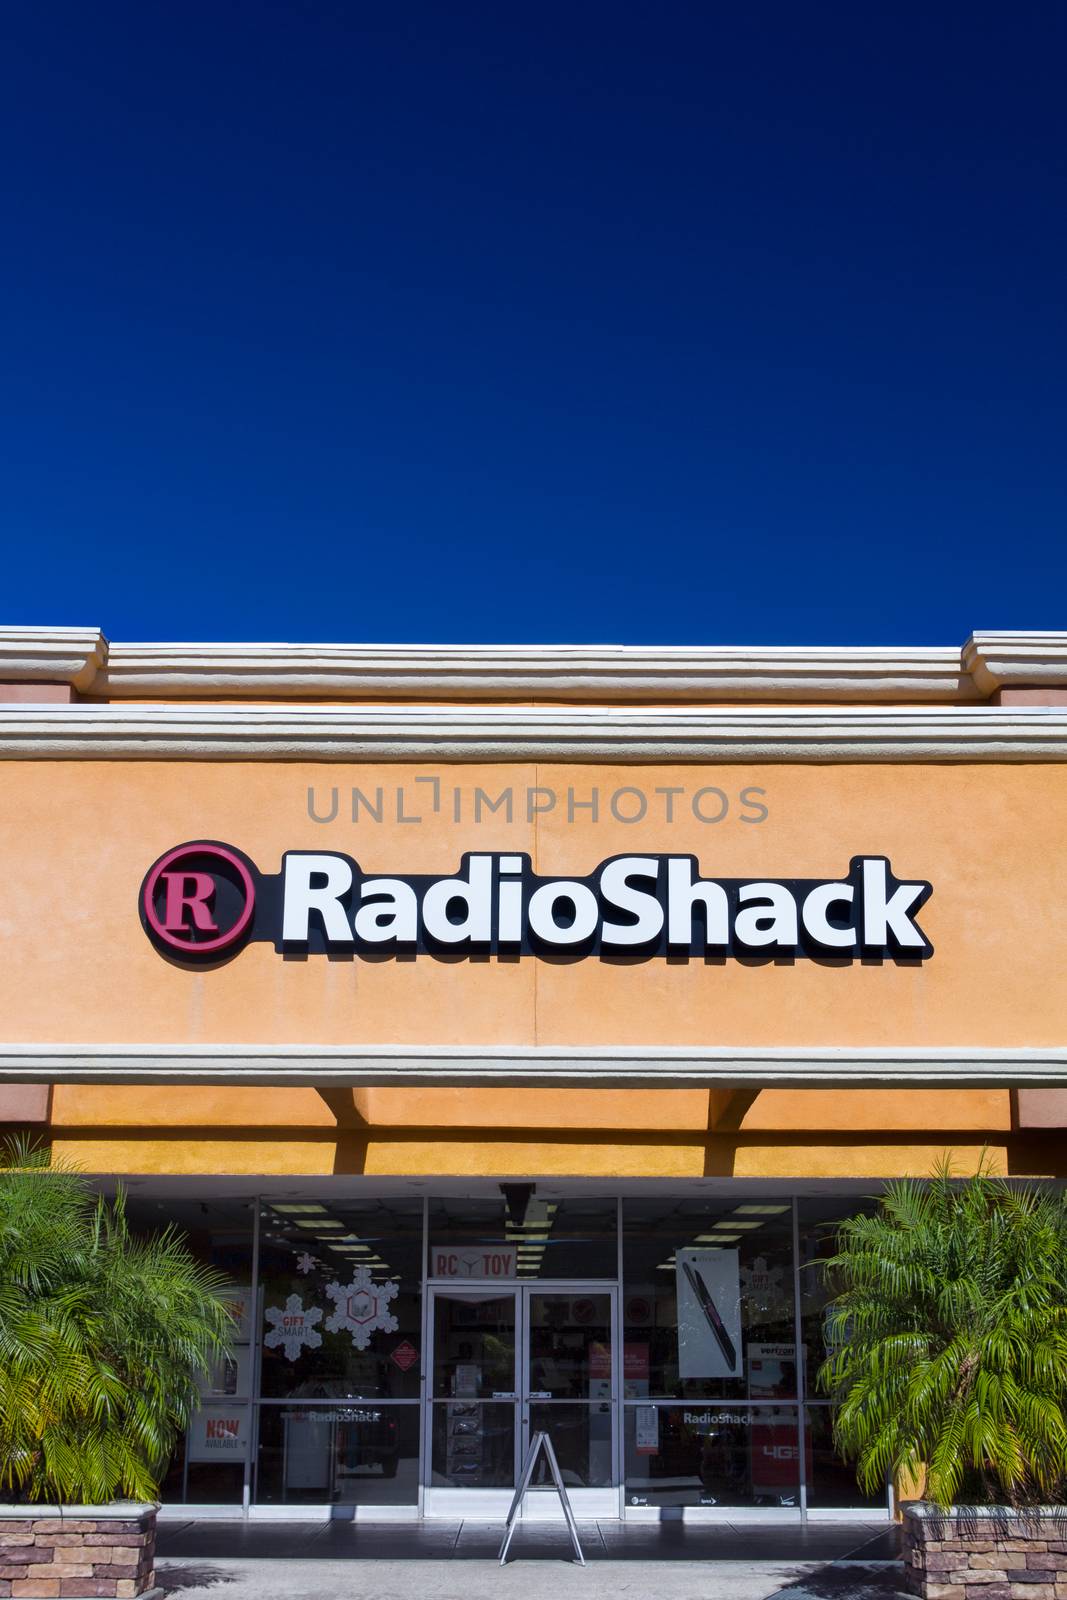 RadioShack retail store exterior by wolterk